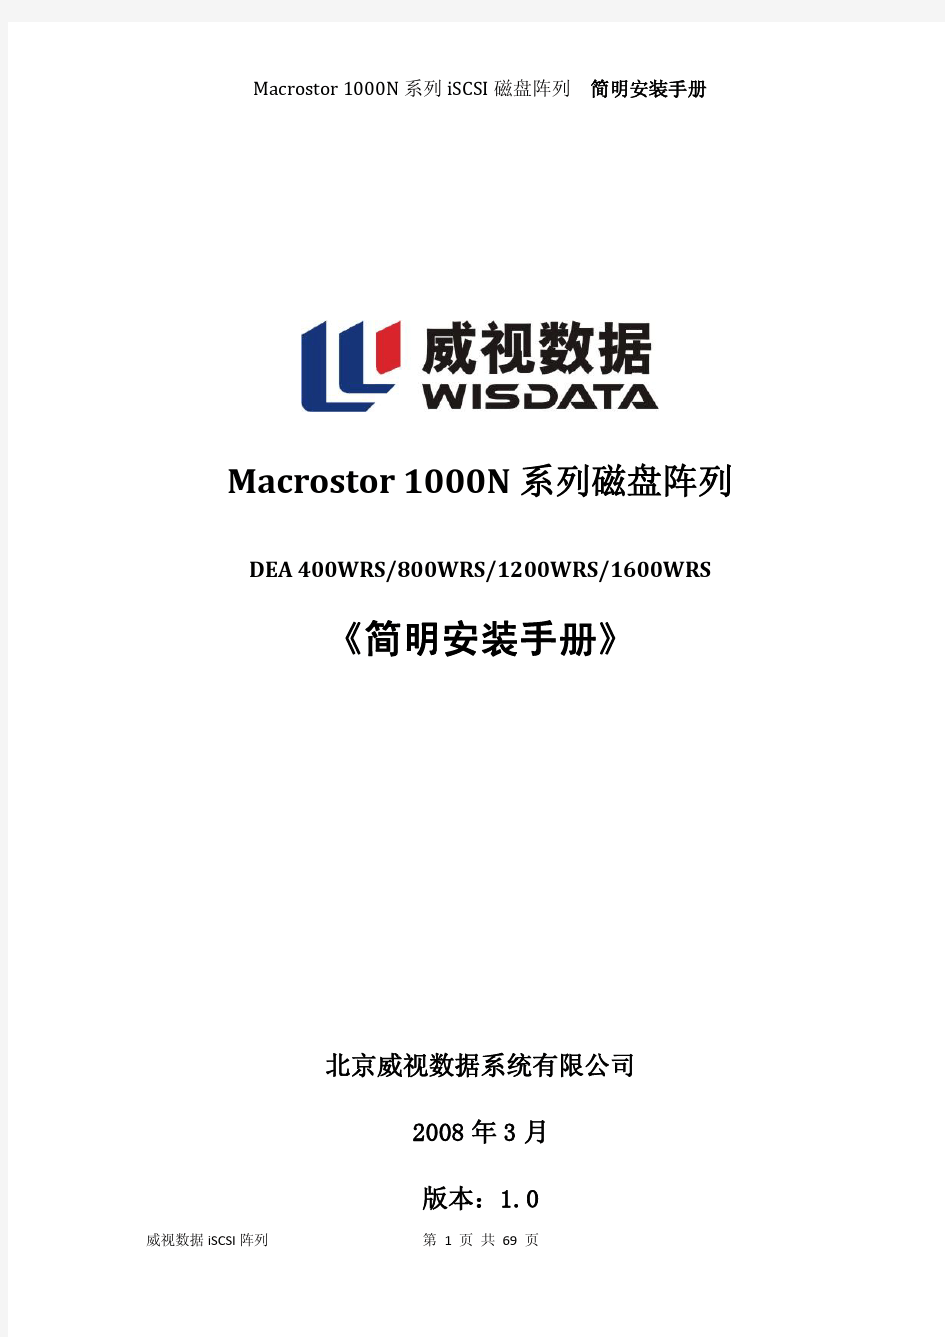 Macrostor 1000N系列iSCSI磁盘阵列  简明安装手册用户手册 v1.0